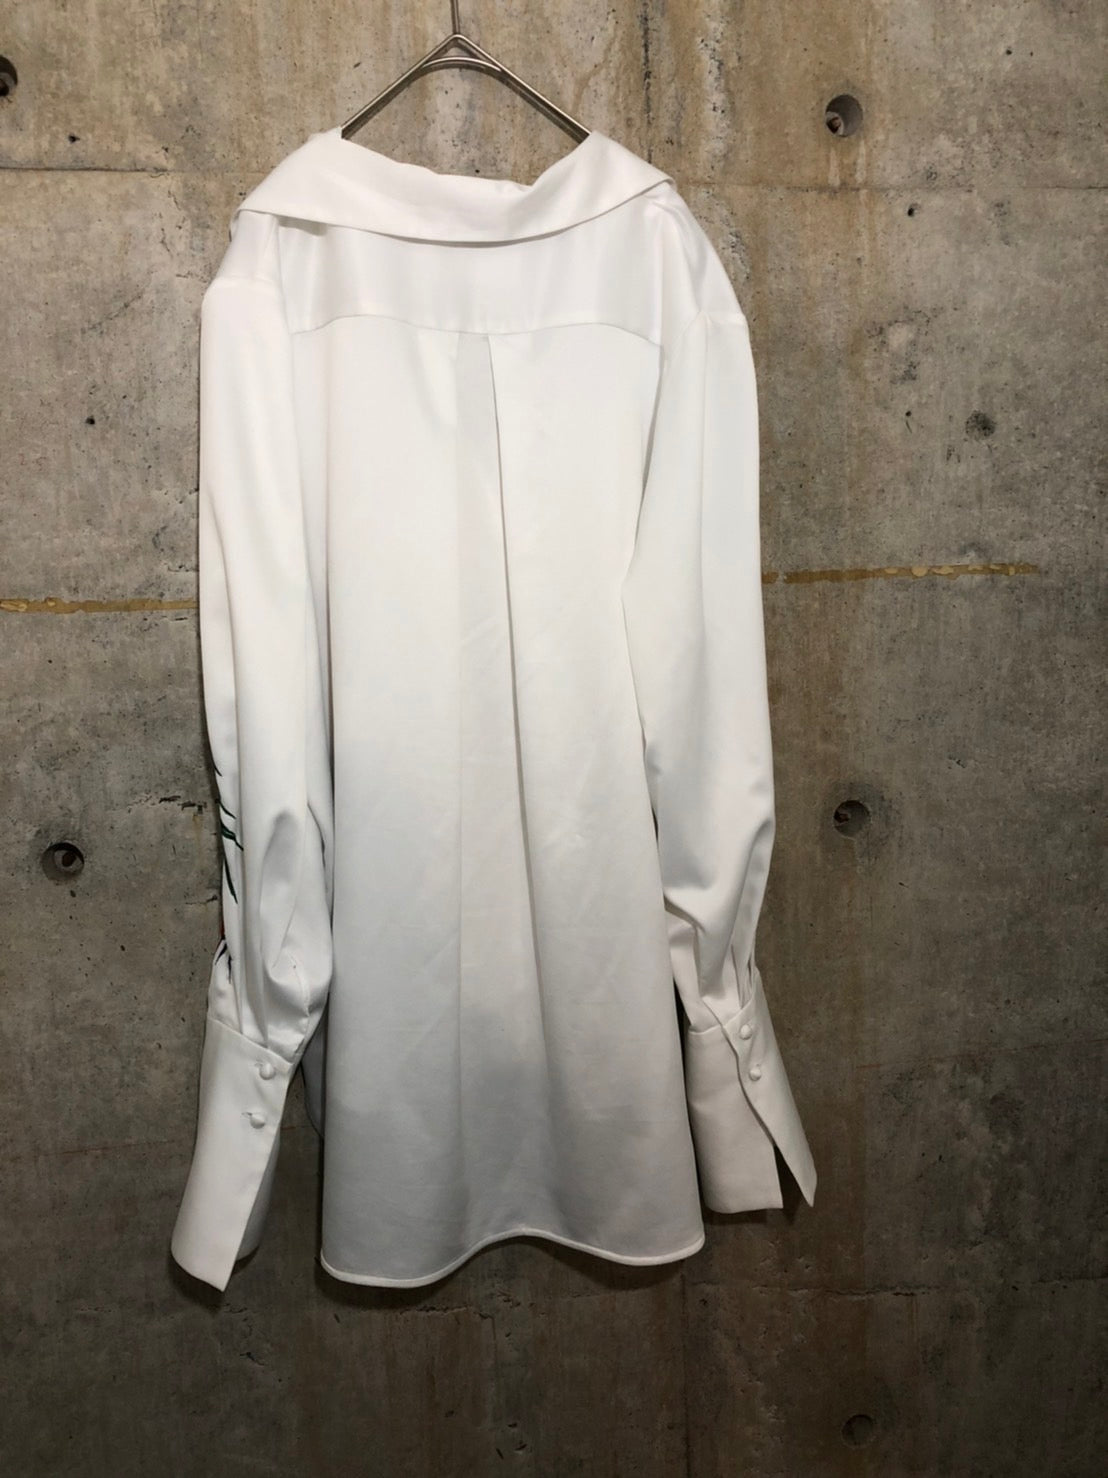 mame kurogouchi ステッチワークシャツ MM18AW-SH070 ホワイト